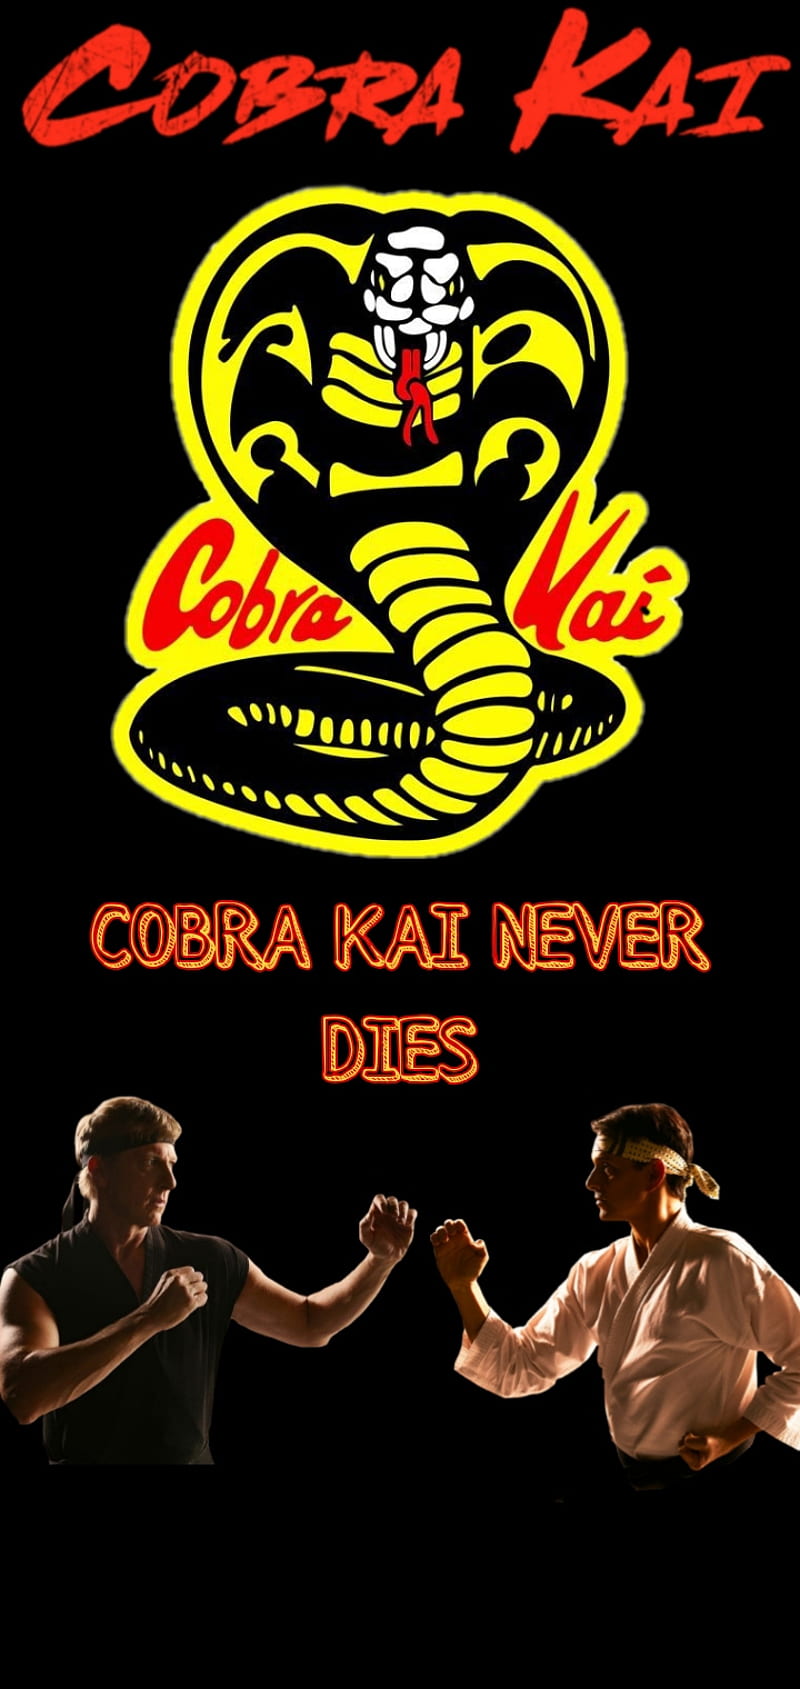  Cobra Kai logo wallpaper   Wallery